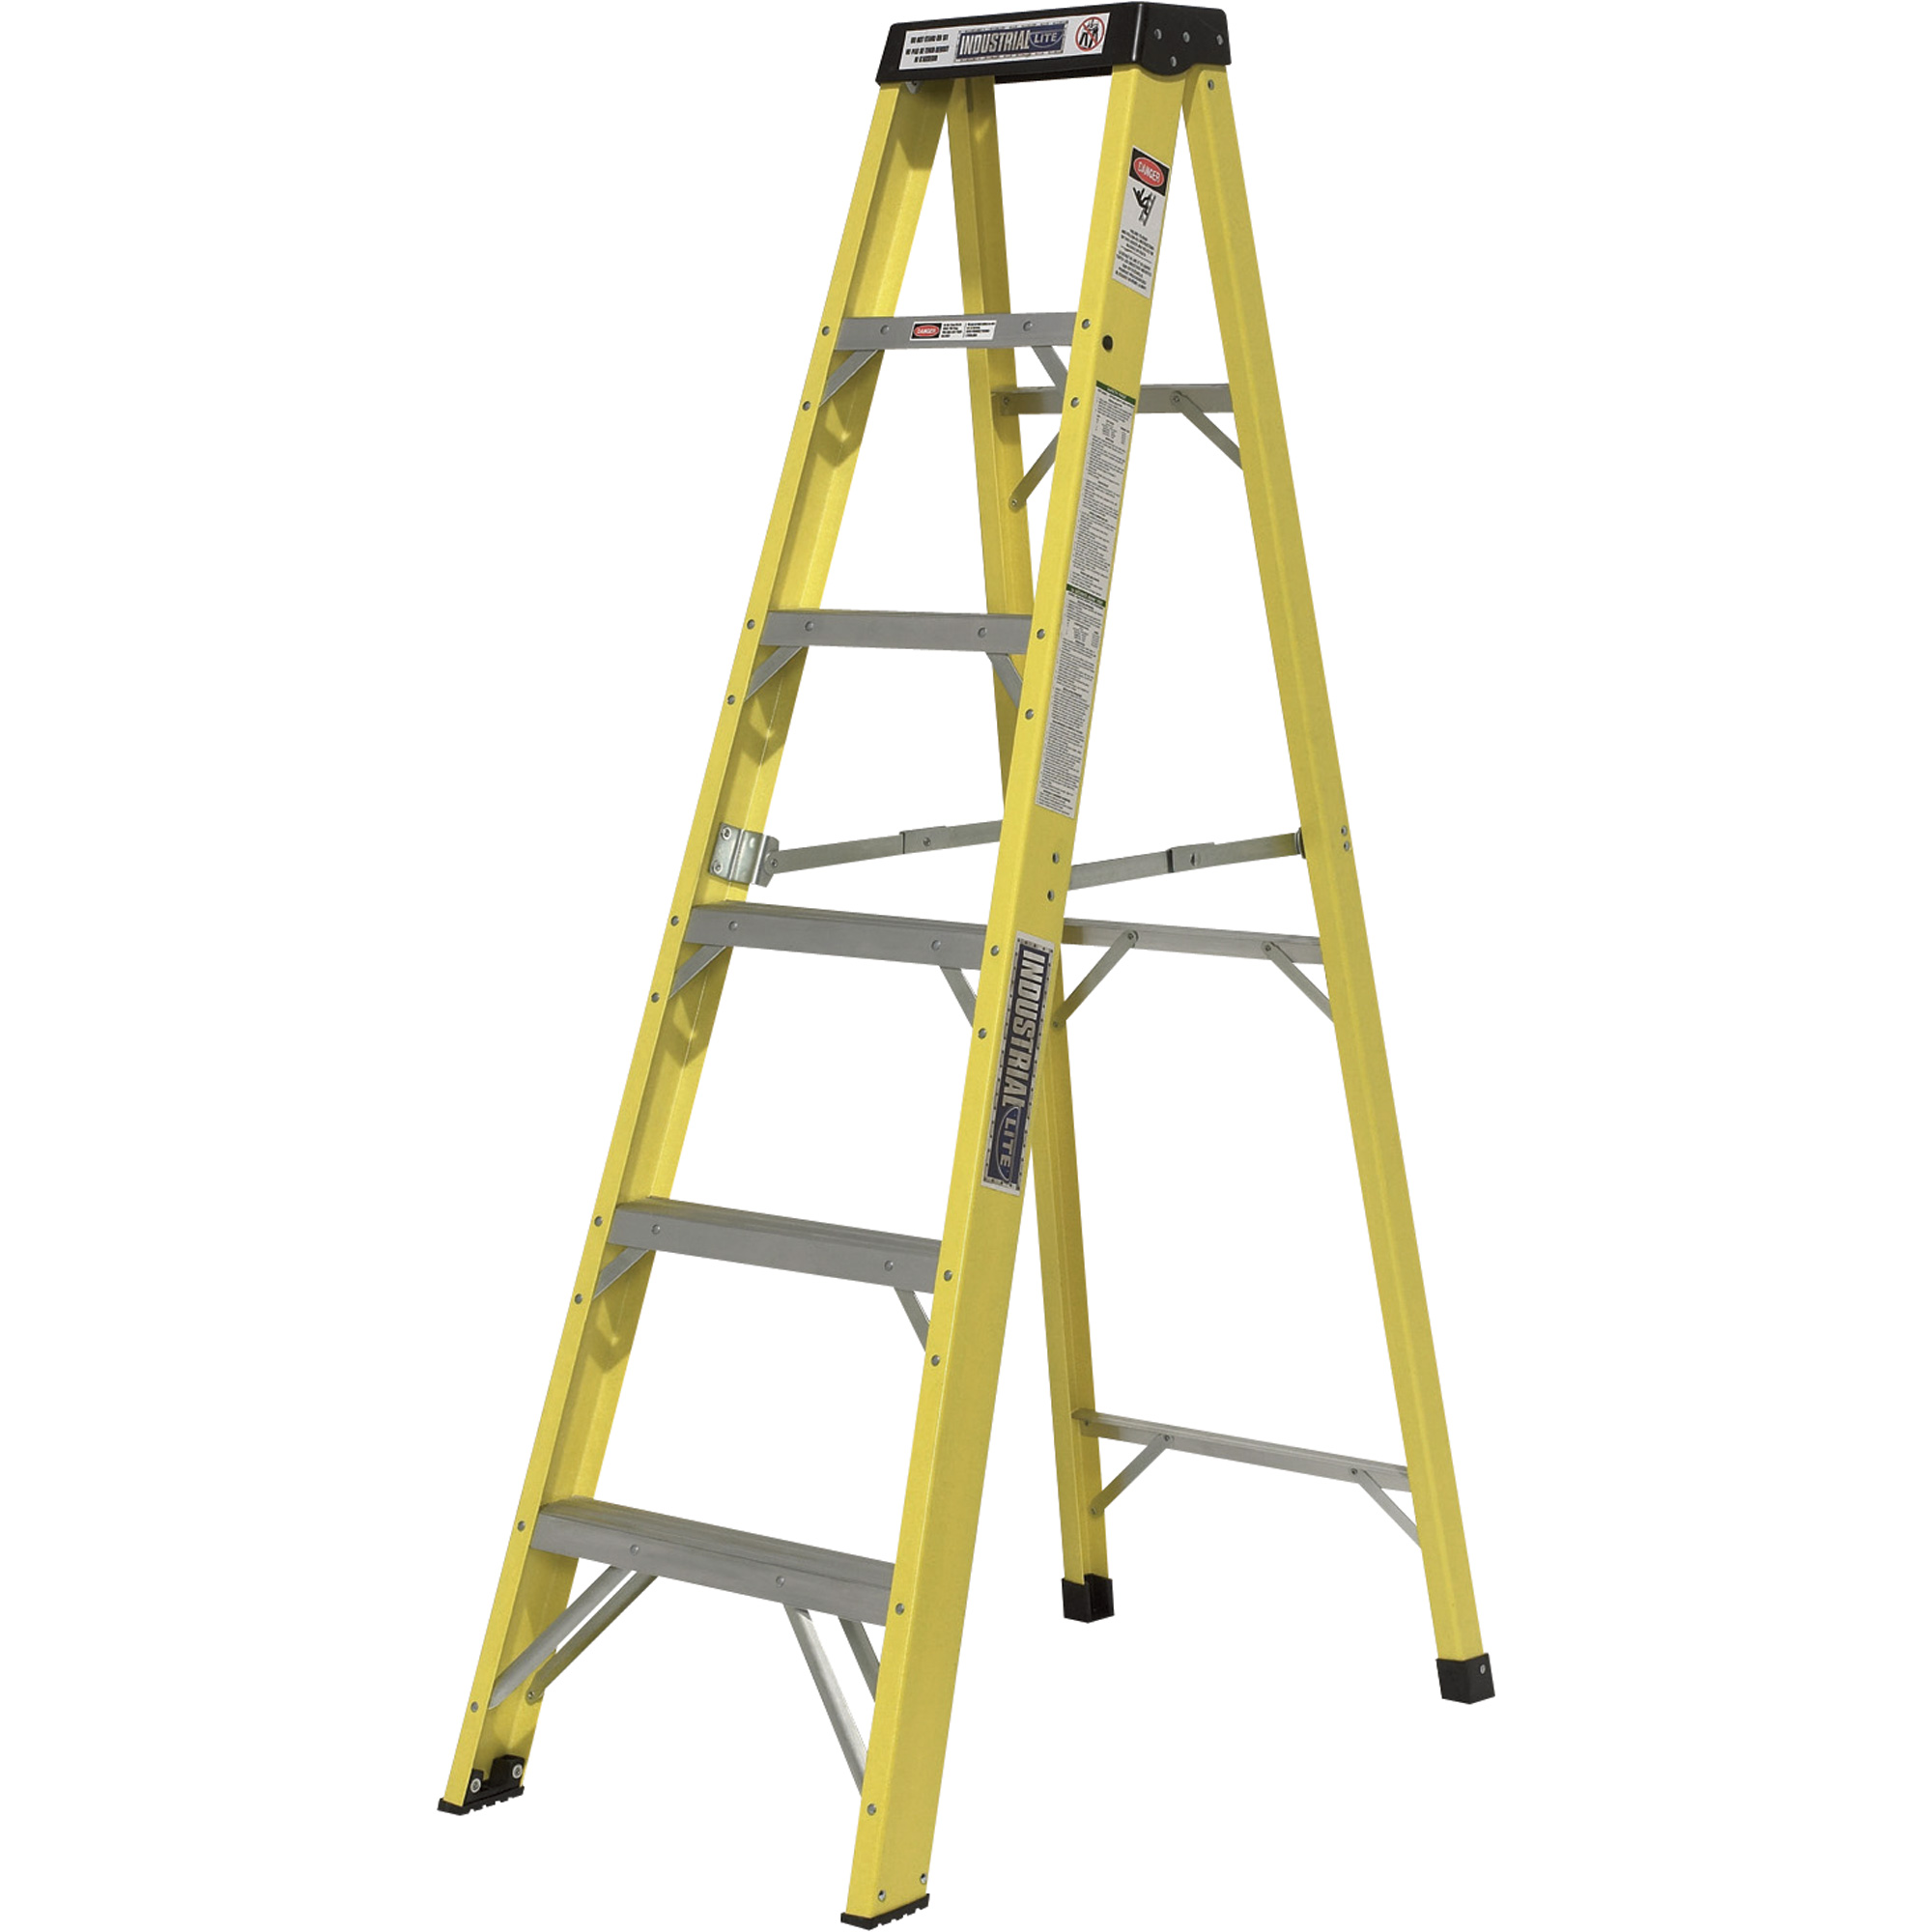 Step ladder clipart